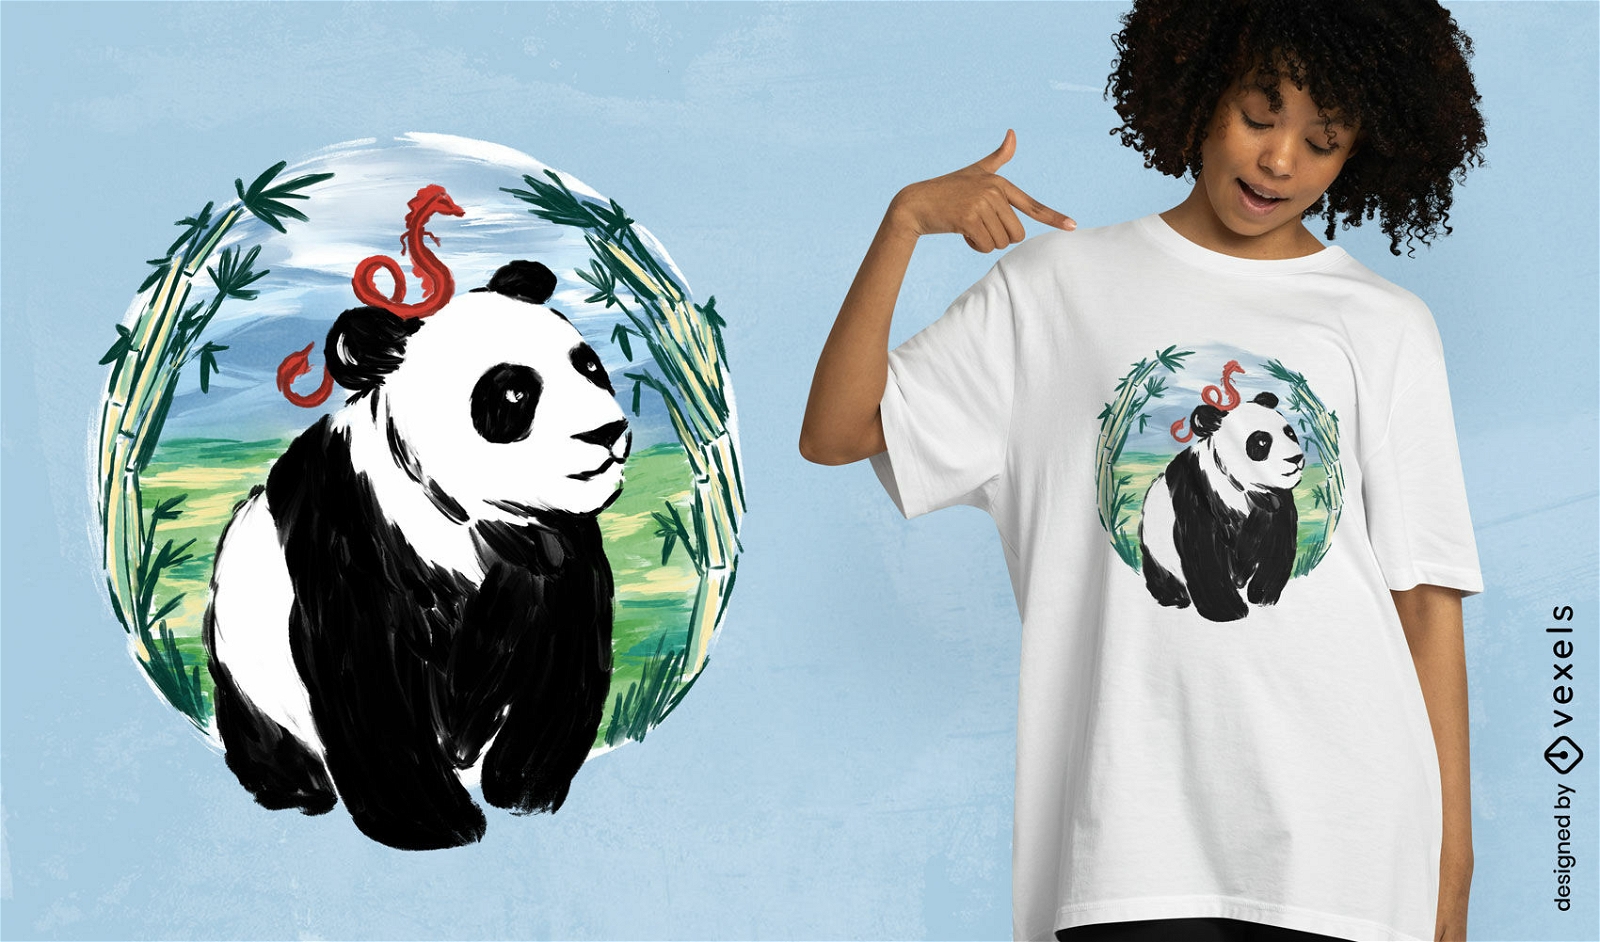 Panda and dragon t-shirt design